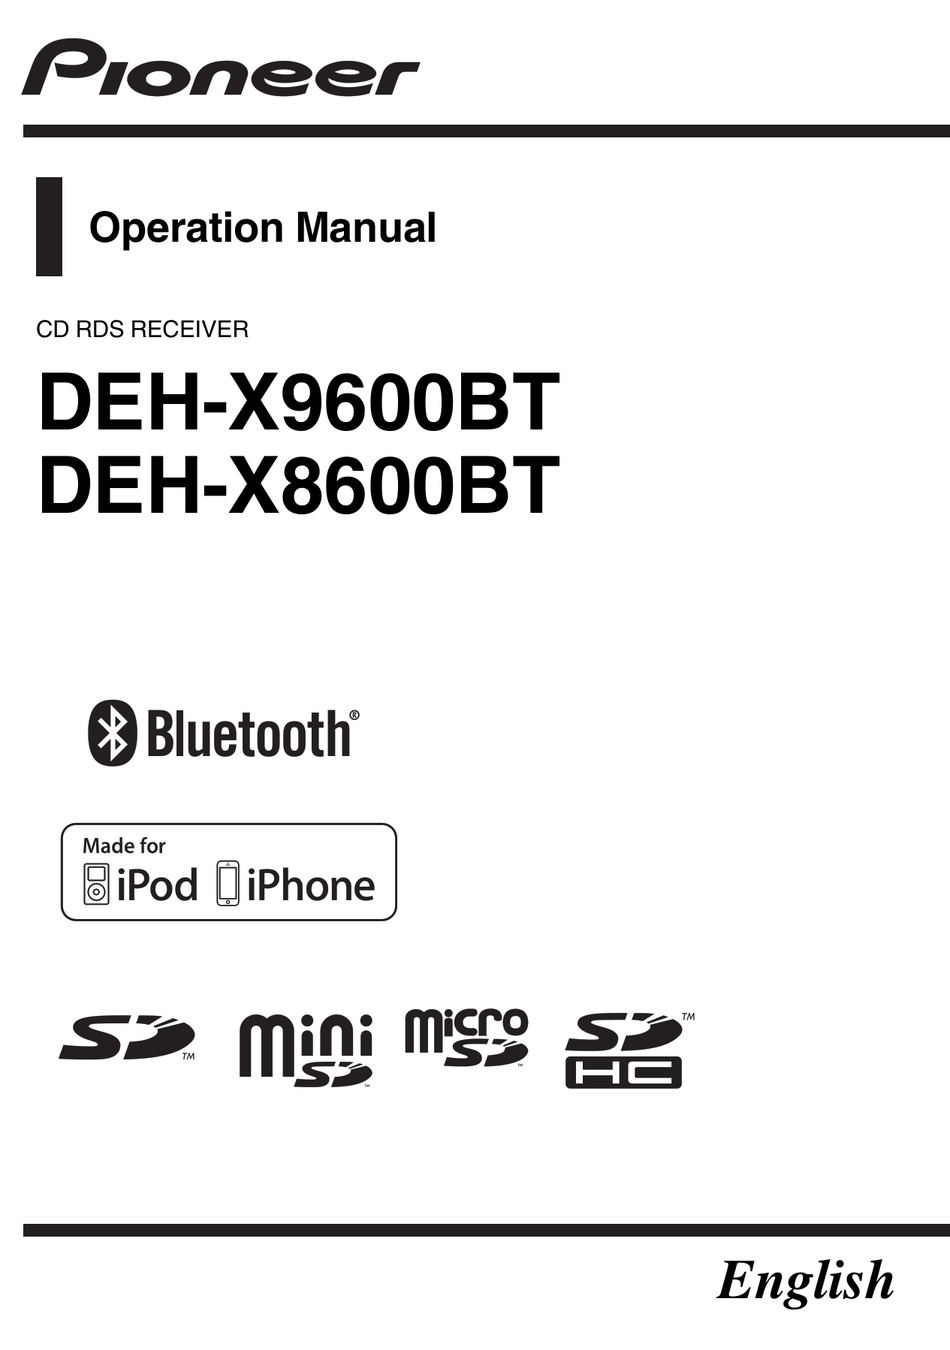 PIONEER DEH-X9600BT OPERATION MANUAL Pdf Download | ManualsLib